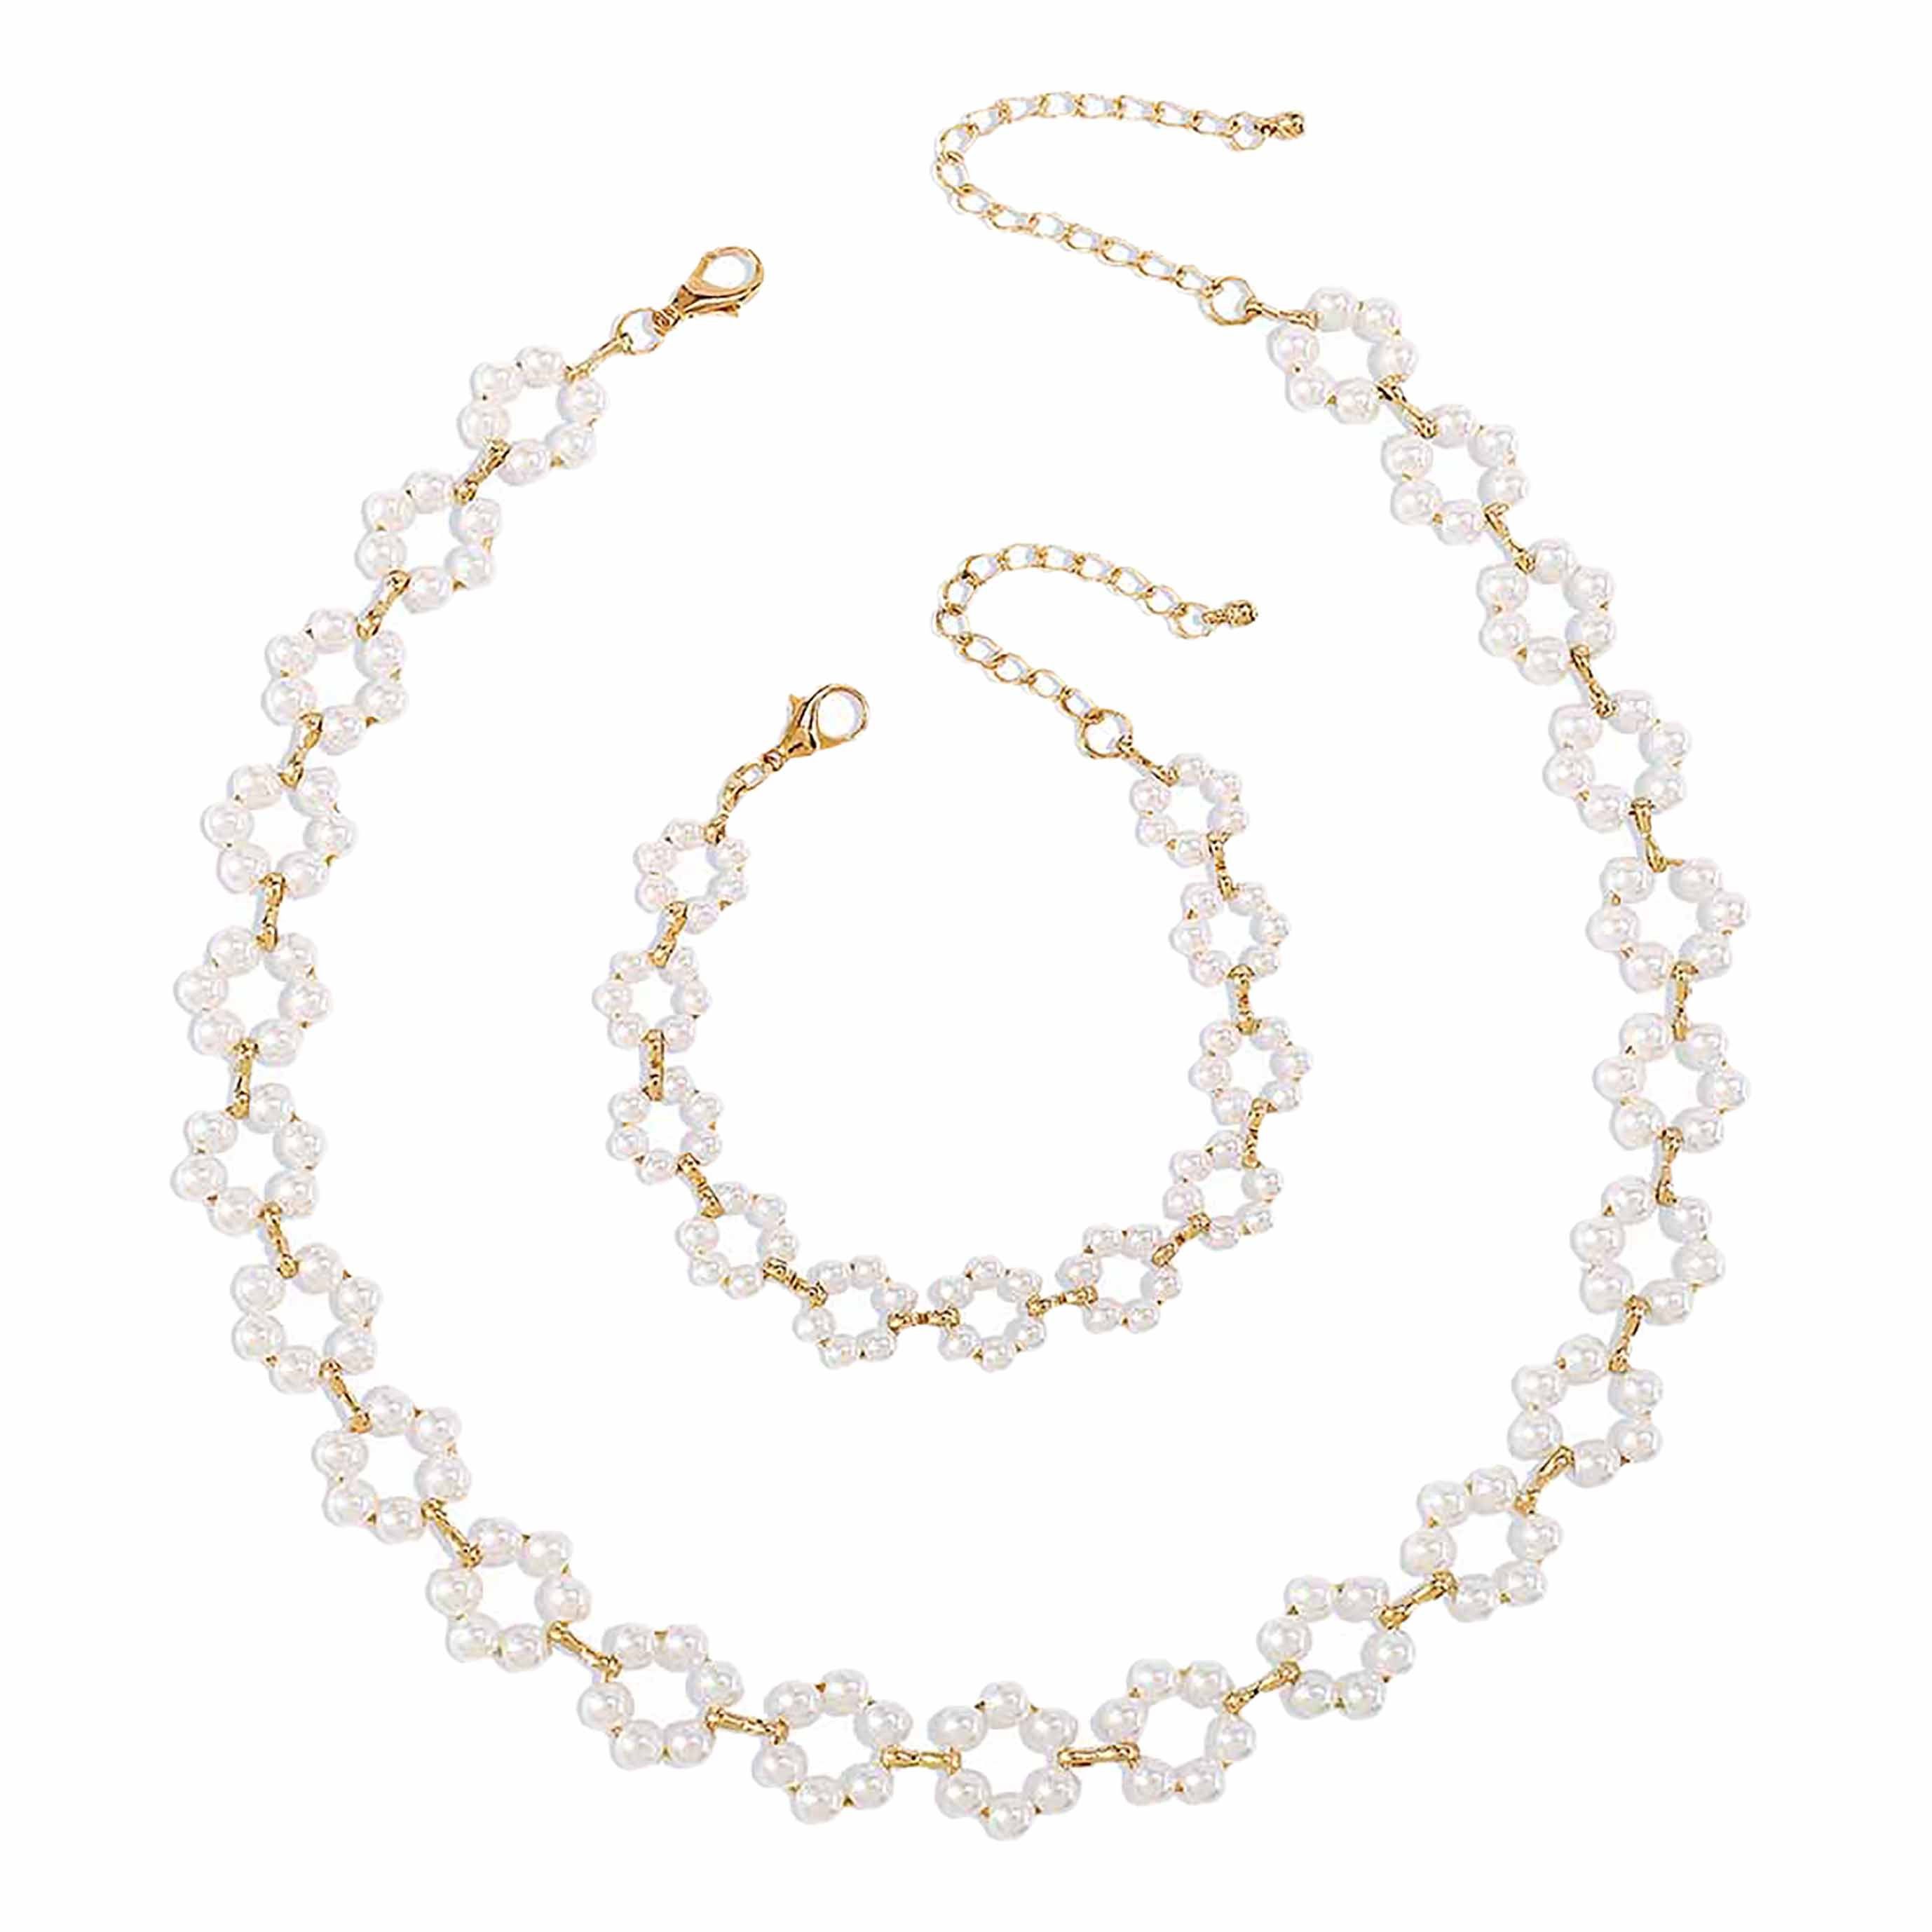 SRRINM Choker Kreative Perlenblumenkette für Frauen